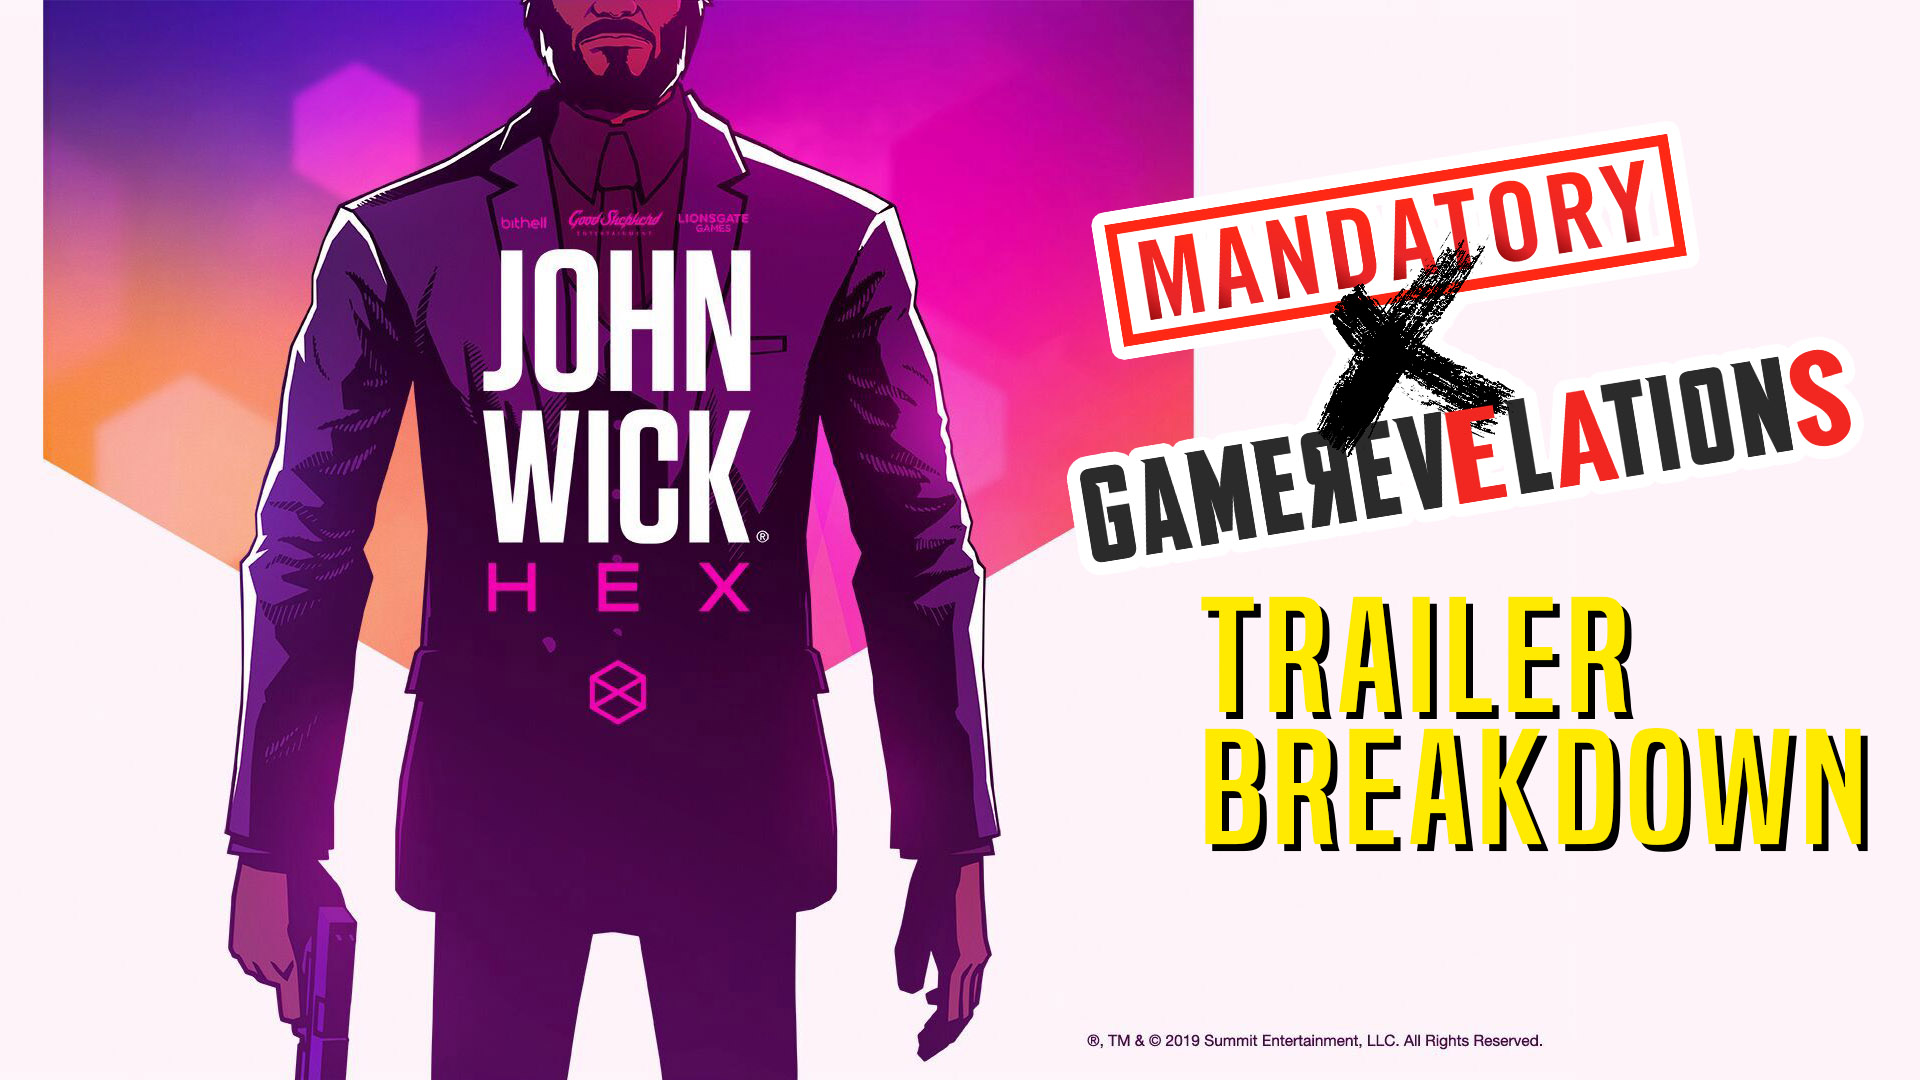 John Wick Hex Announcement Trailer Breakdown Gamerevelations